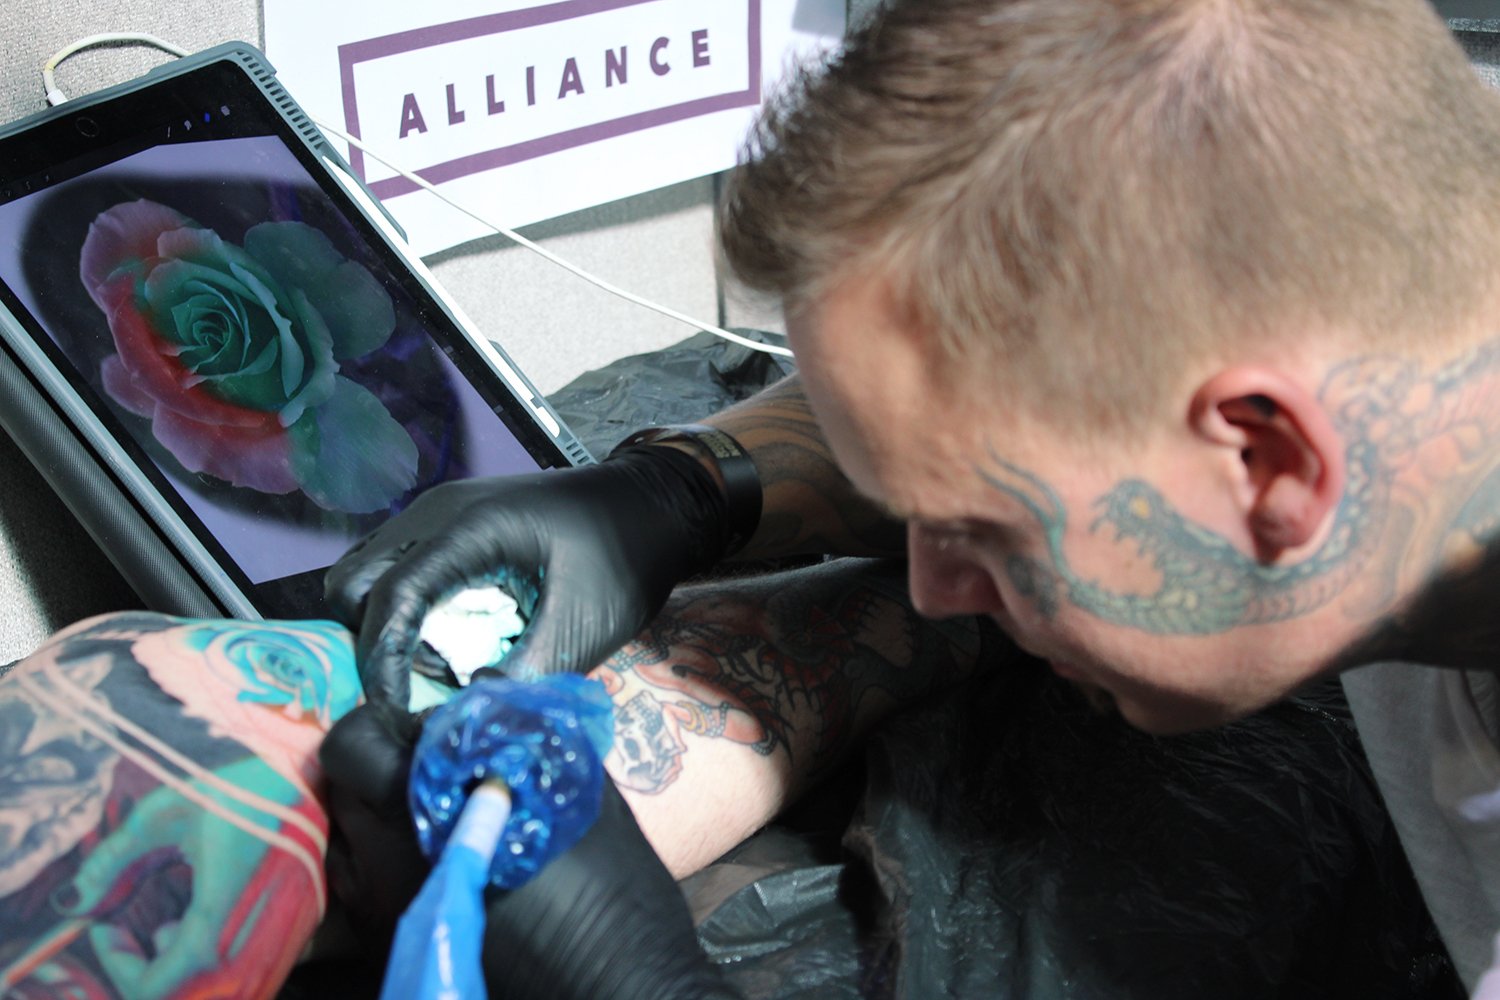 Phatt German tattooing at London convention, leg